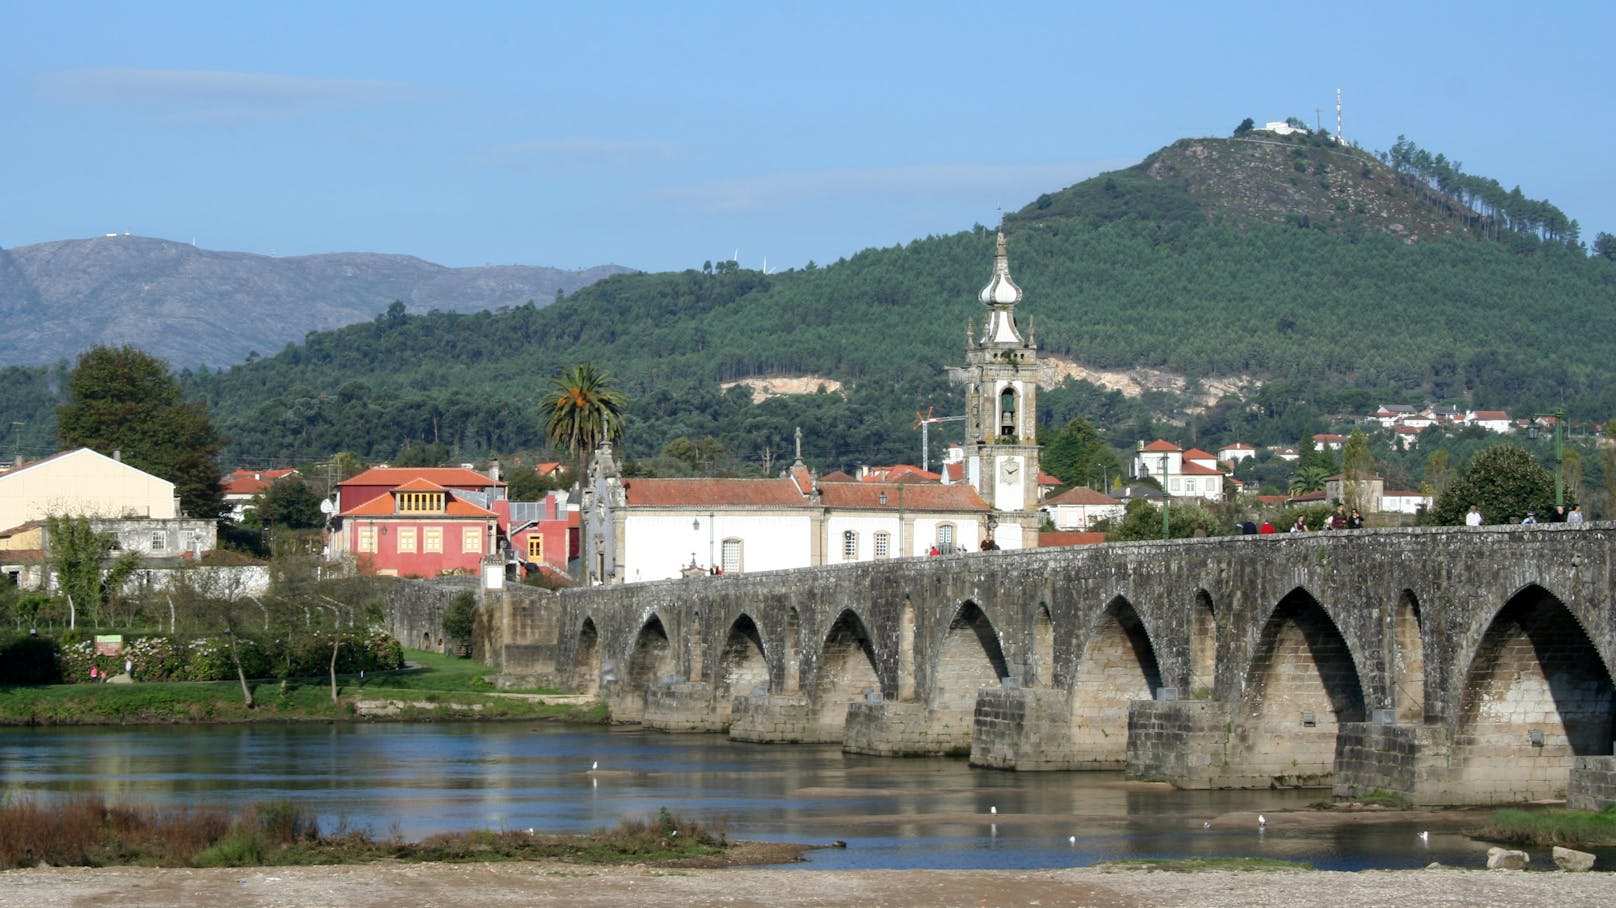 Die historische, namensgebende Brücke des Ortes Ponte de Lima